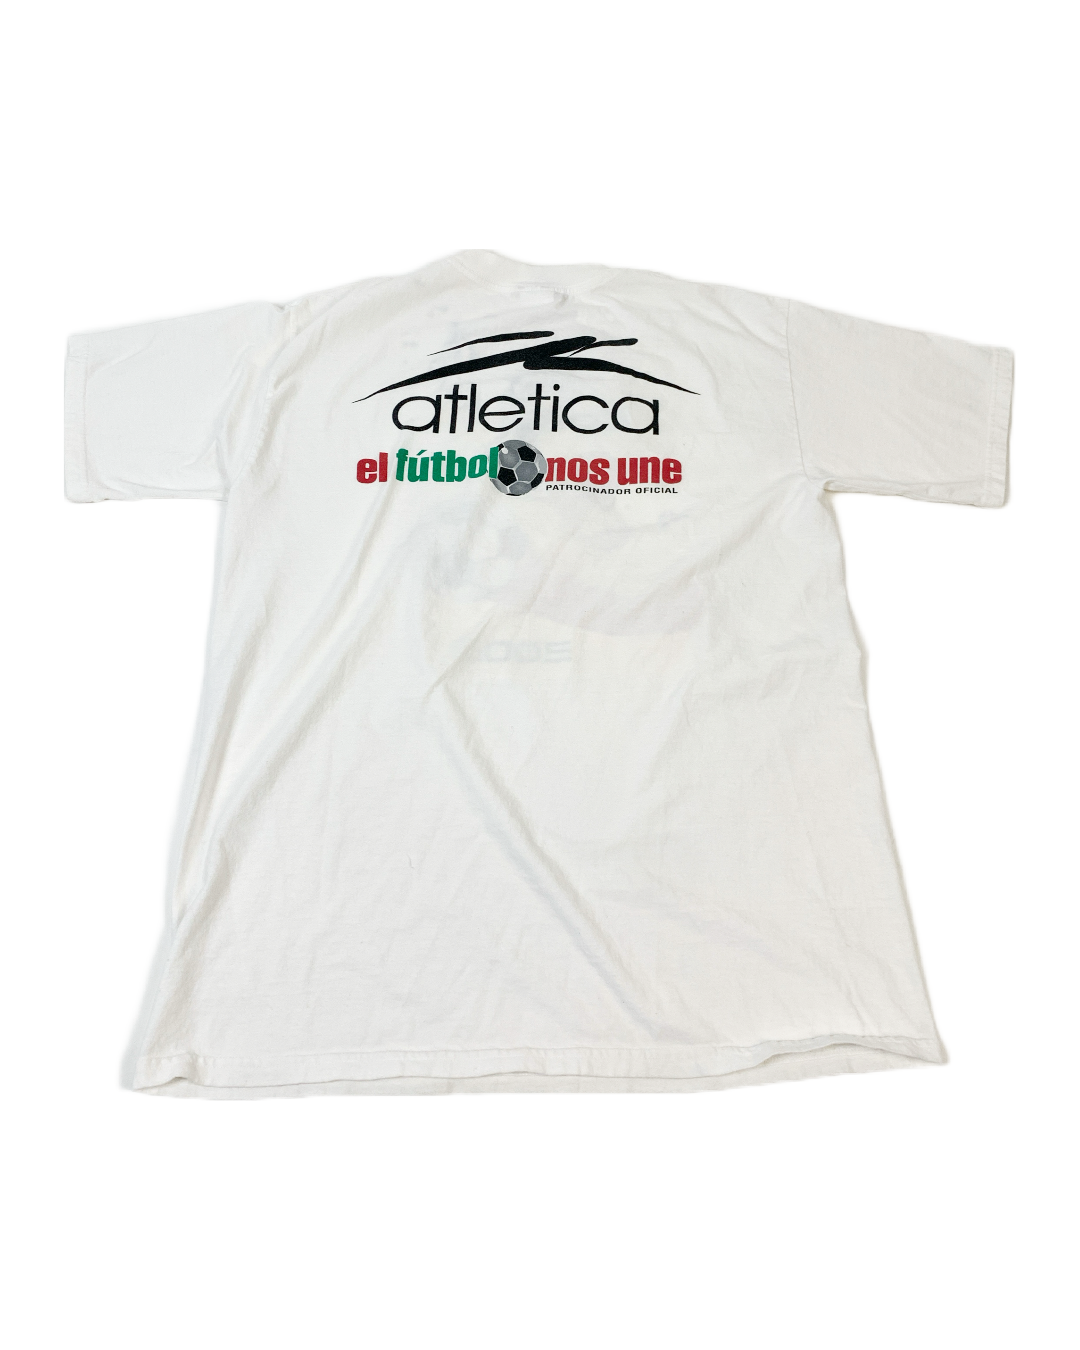 Atletica Copa Sol 2001 Vintage T-Shirt - XL